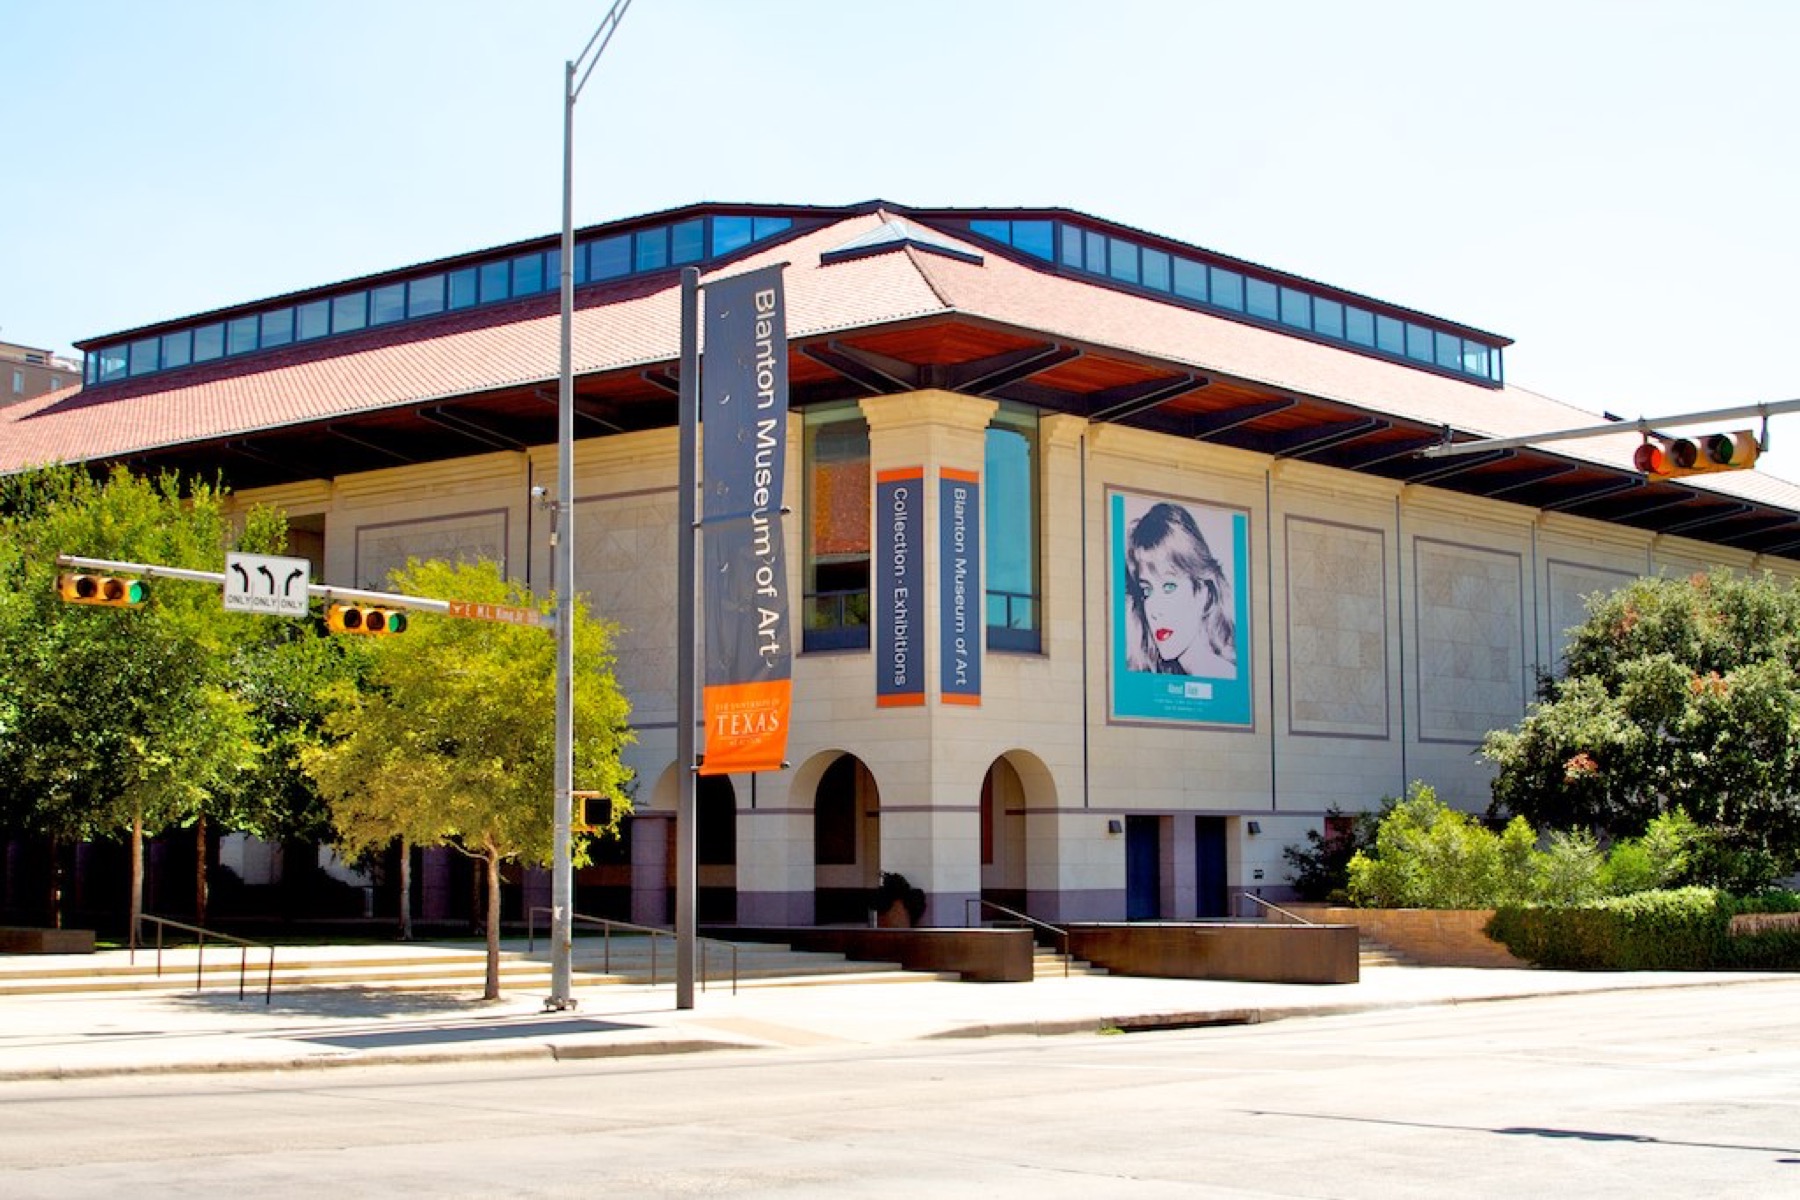 The Blanton Museum of Art